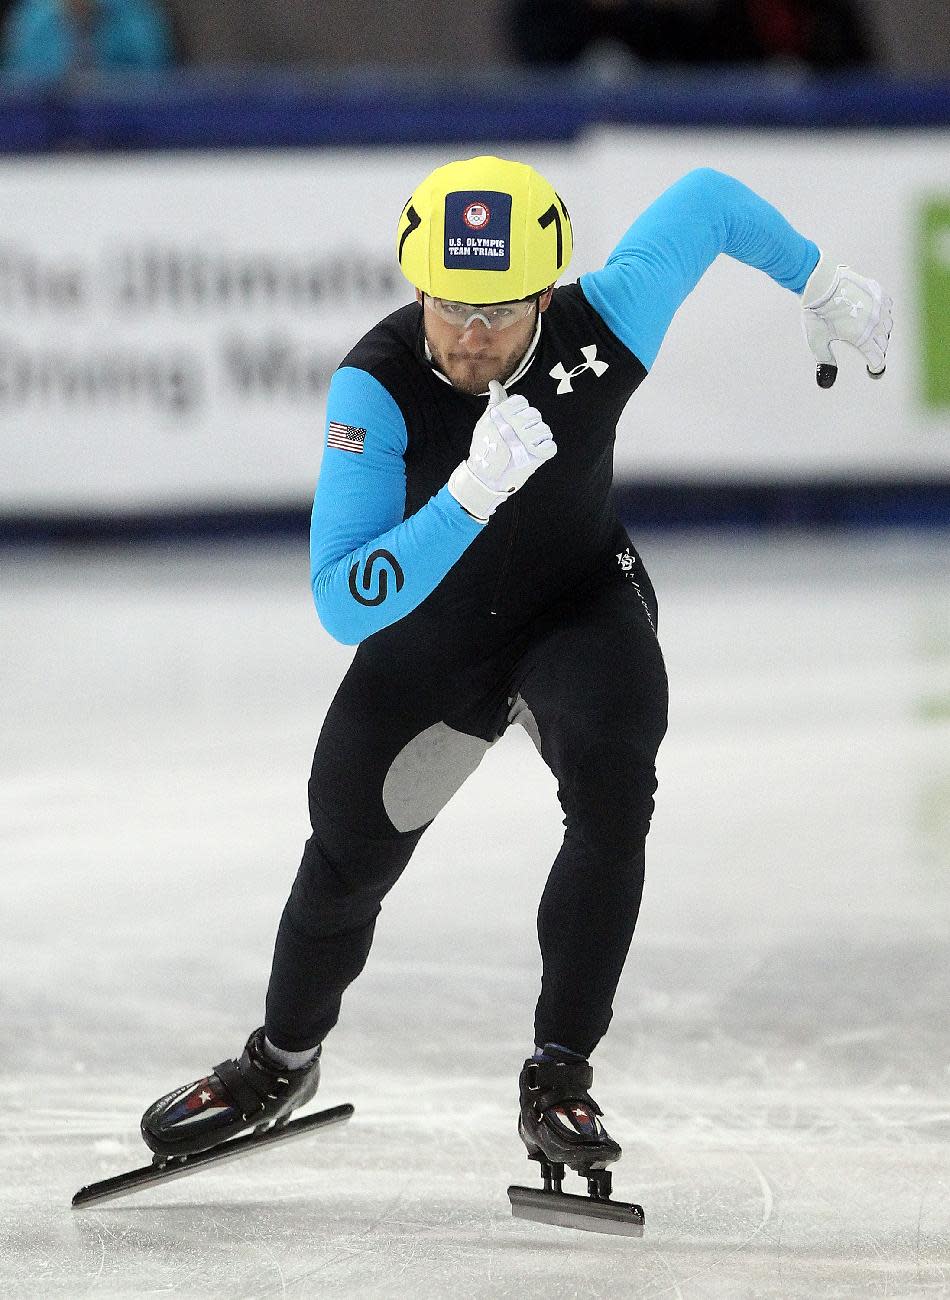 Eduardo Alvarez competes in the men's 1,000 meters during the U.S. Olympic short track speedskating trials on Sunday, Jan. 5, 2014, in Kearns, Utah. (AP Photo/Rick Bowmer)